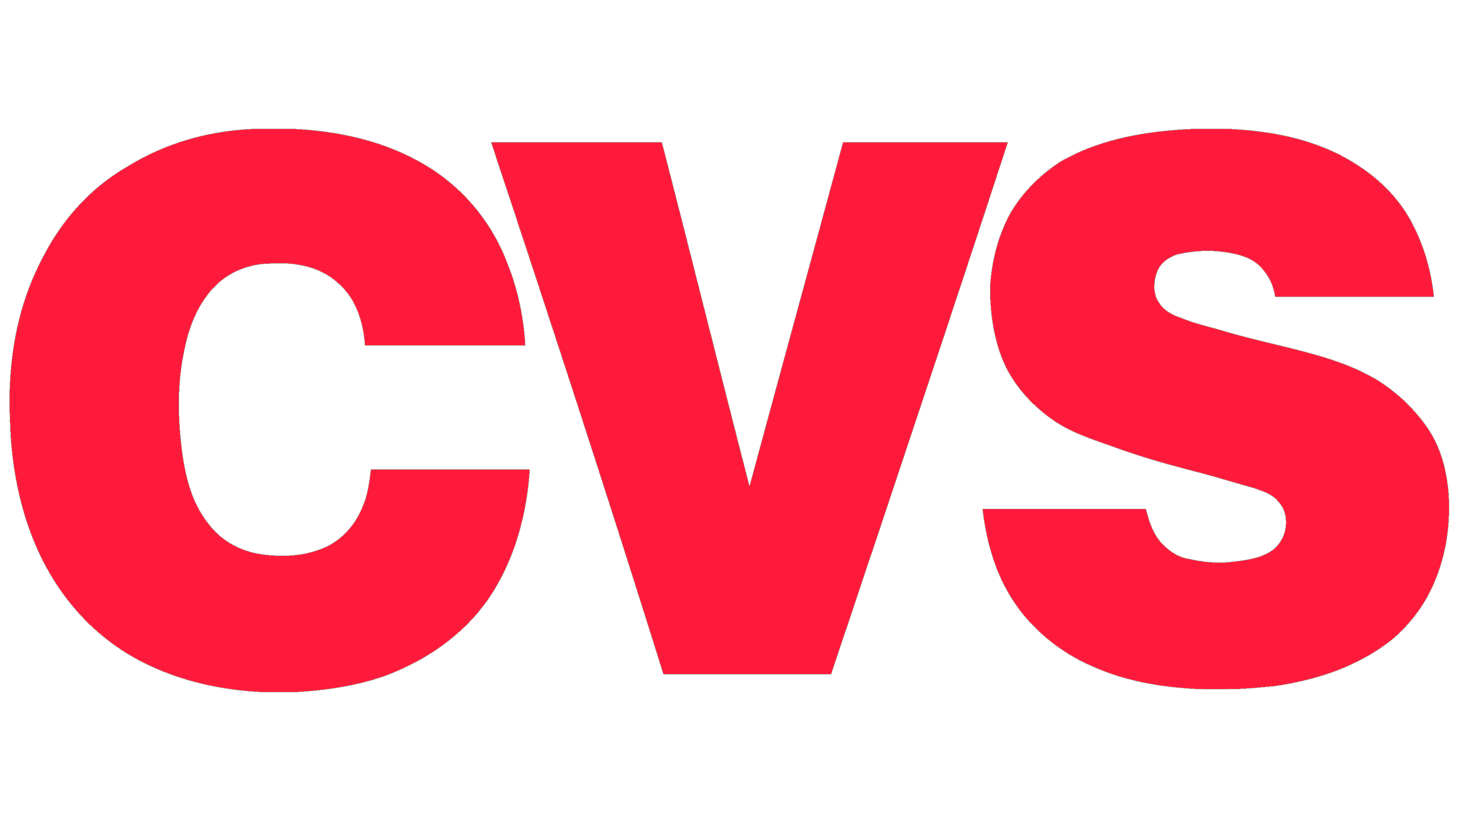 Cvs sign 1969 2016